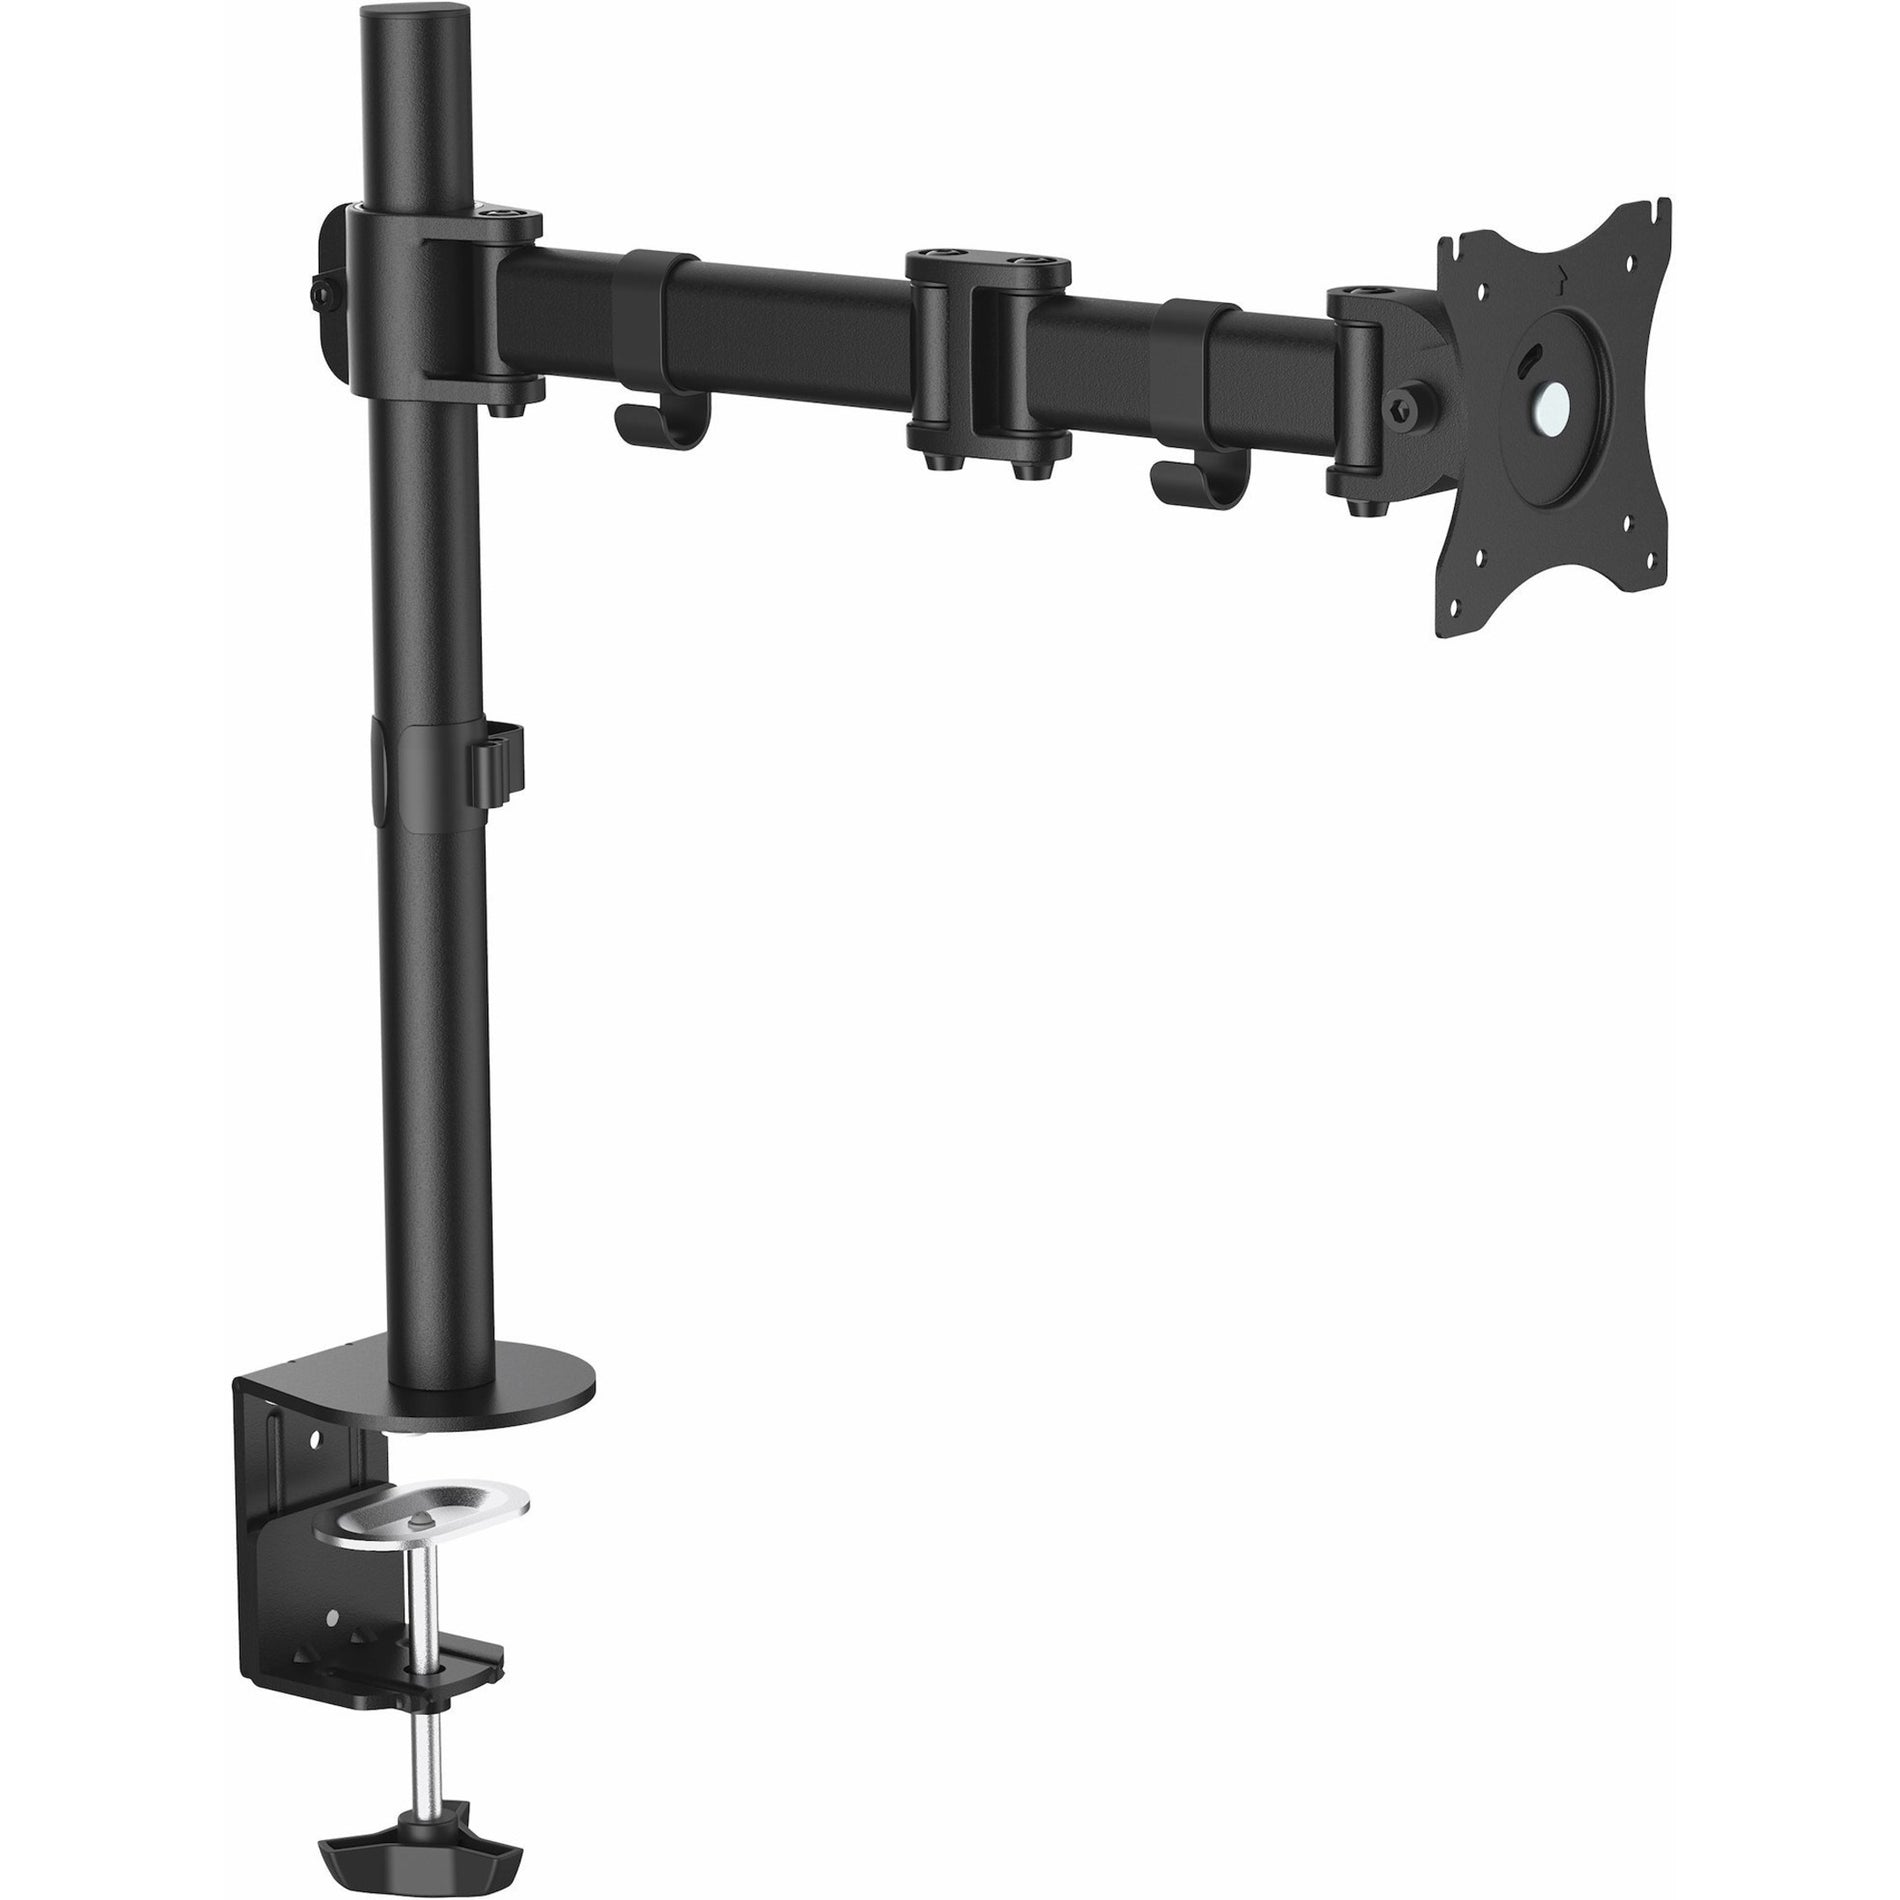 StarTech.com ARMPIVOTB Desk-Mount Monitor Arm - Articulating Arm, Heavy Duty Steel, VESA Mount, 27in, 17.6 lb/8 kg